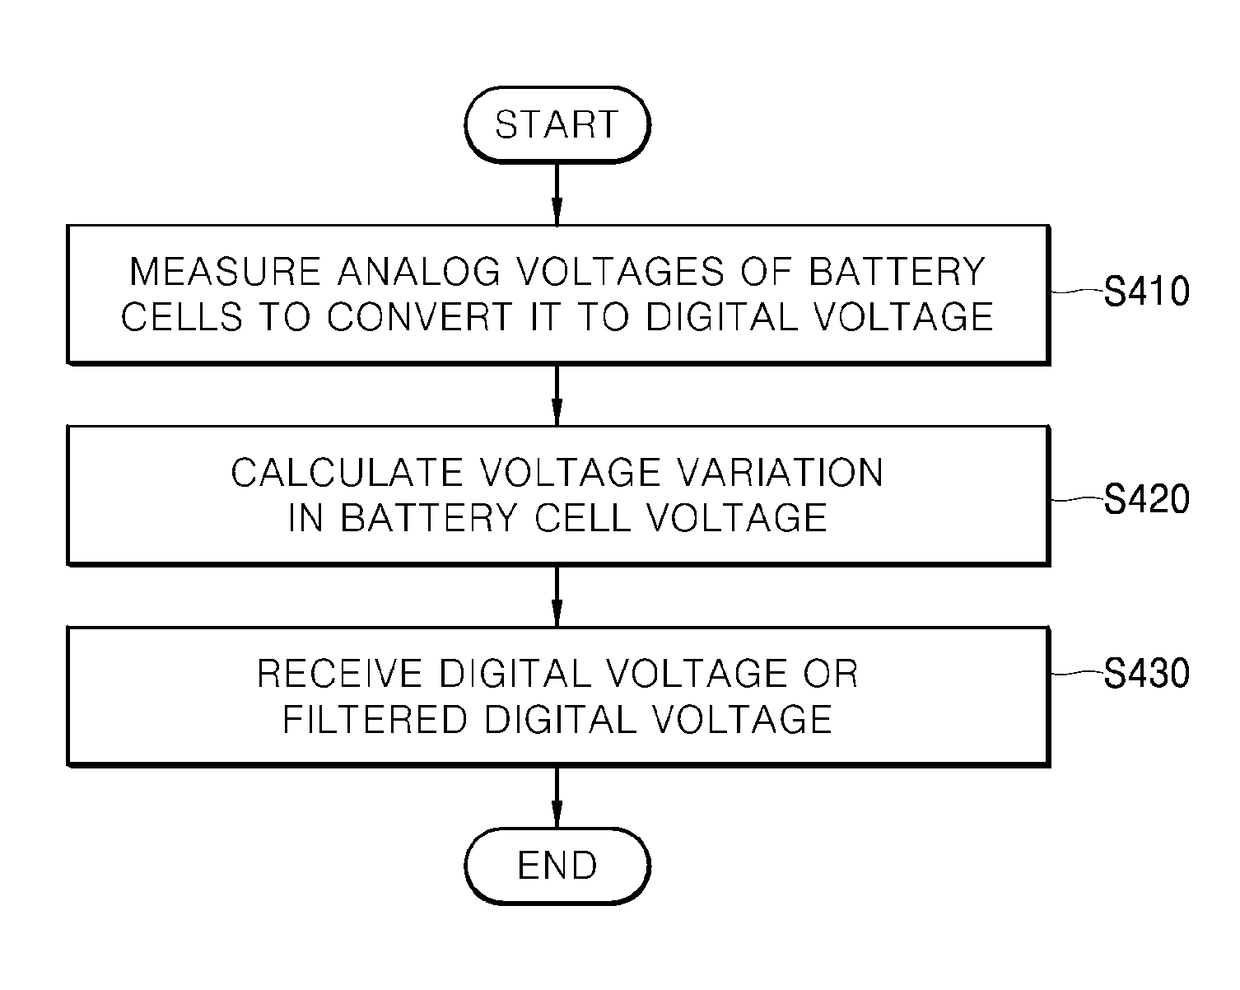 Battery monitoring apparatus and battery monitoring method